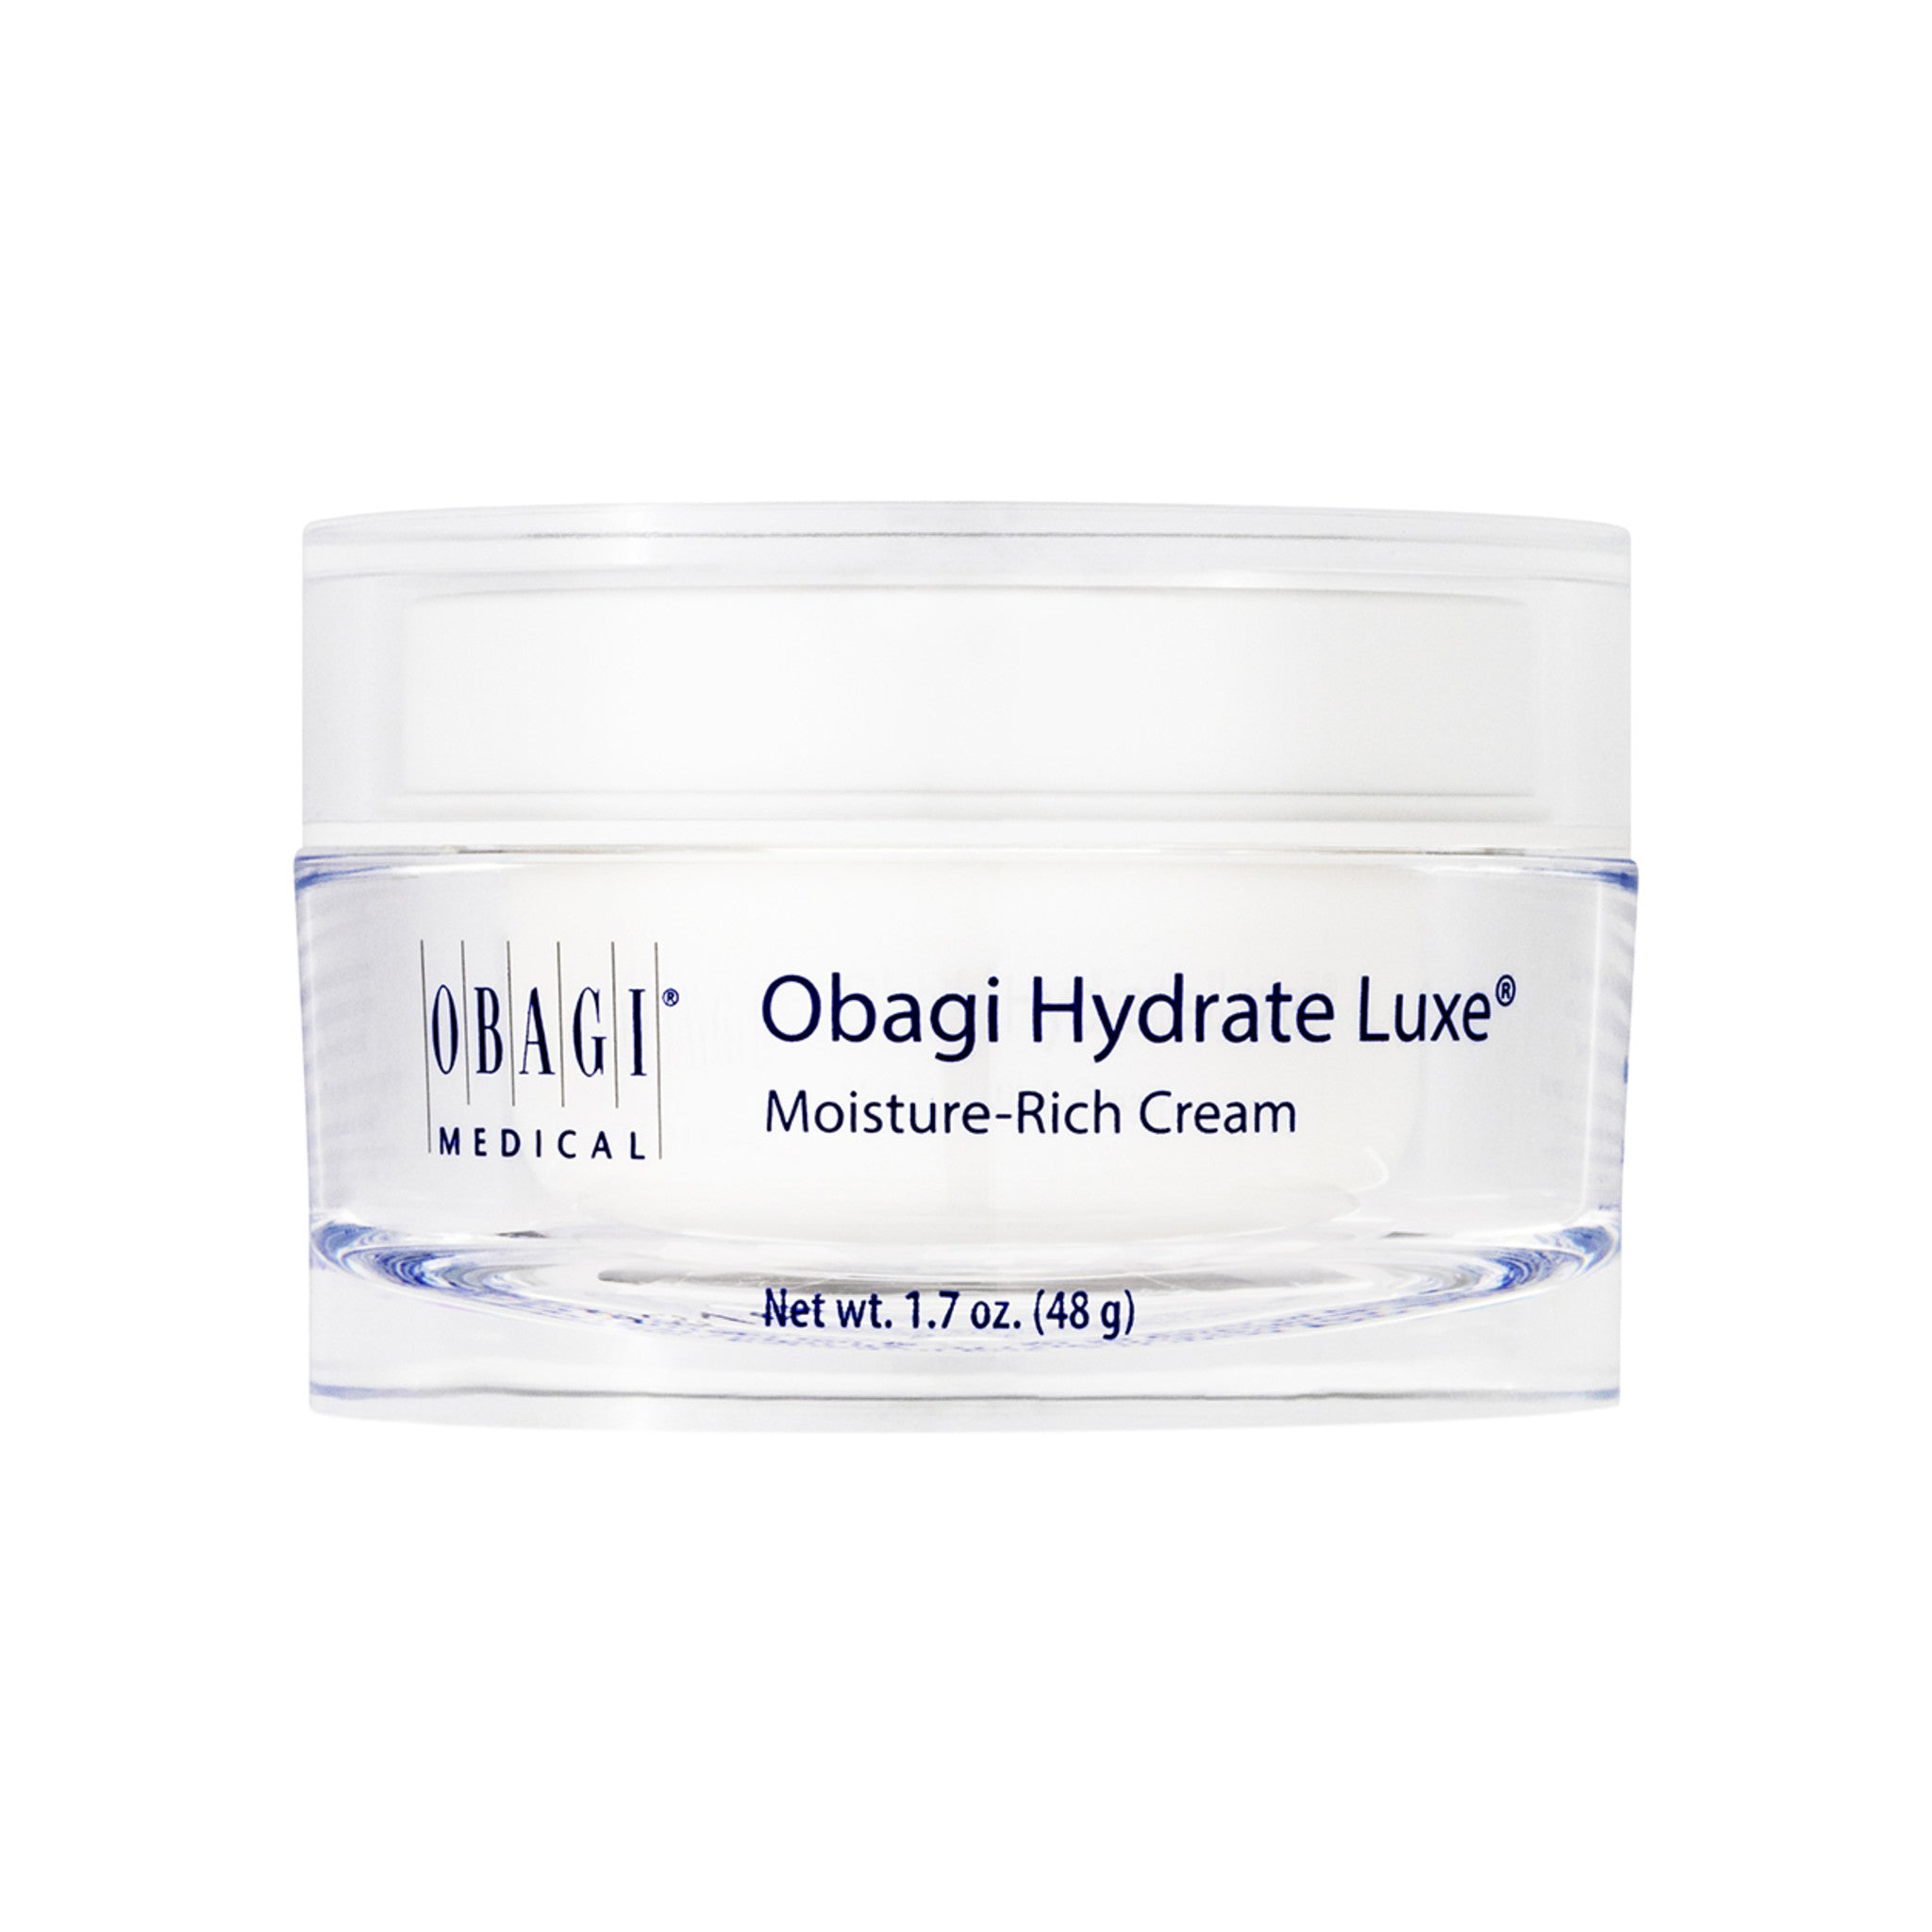 Obagi Hydrate Luxe Moisture-Rich Cream main image.